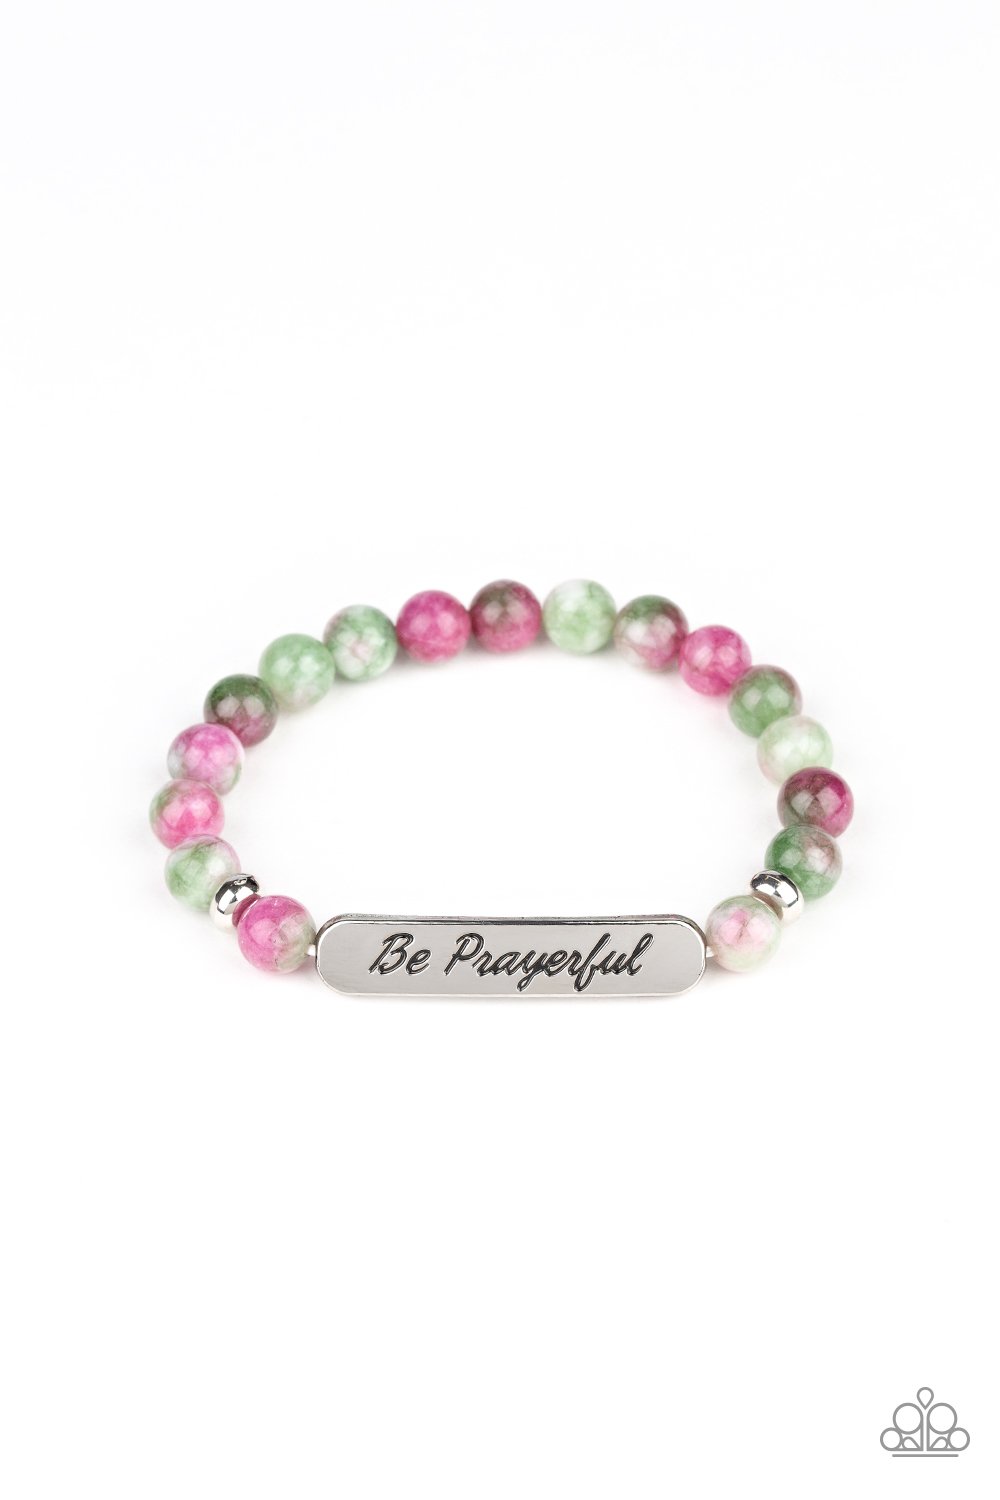 Be Prayerful - Paparazzi - Purple and Green Stone Bead Inspirational Bracelet